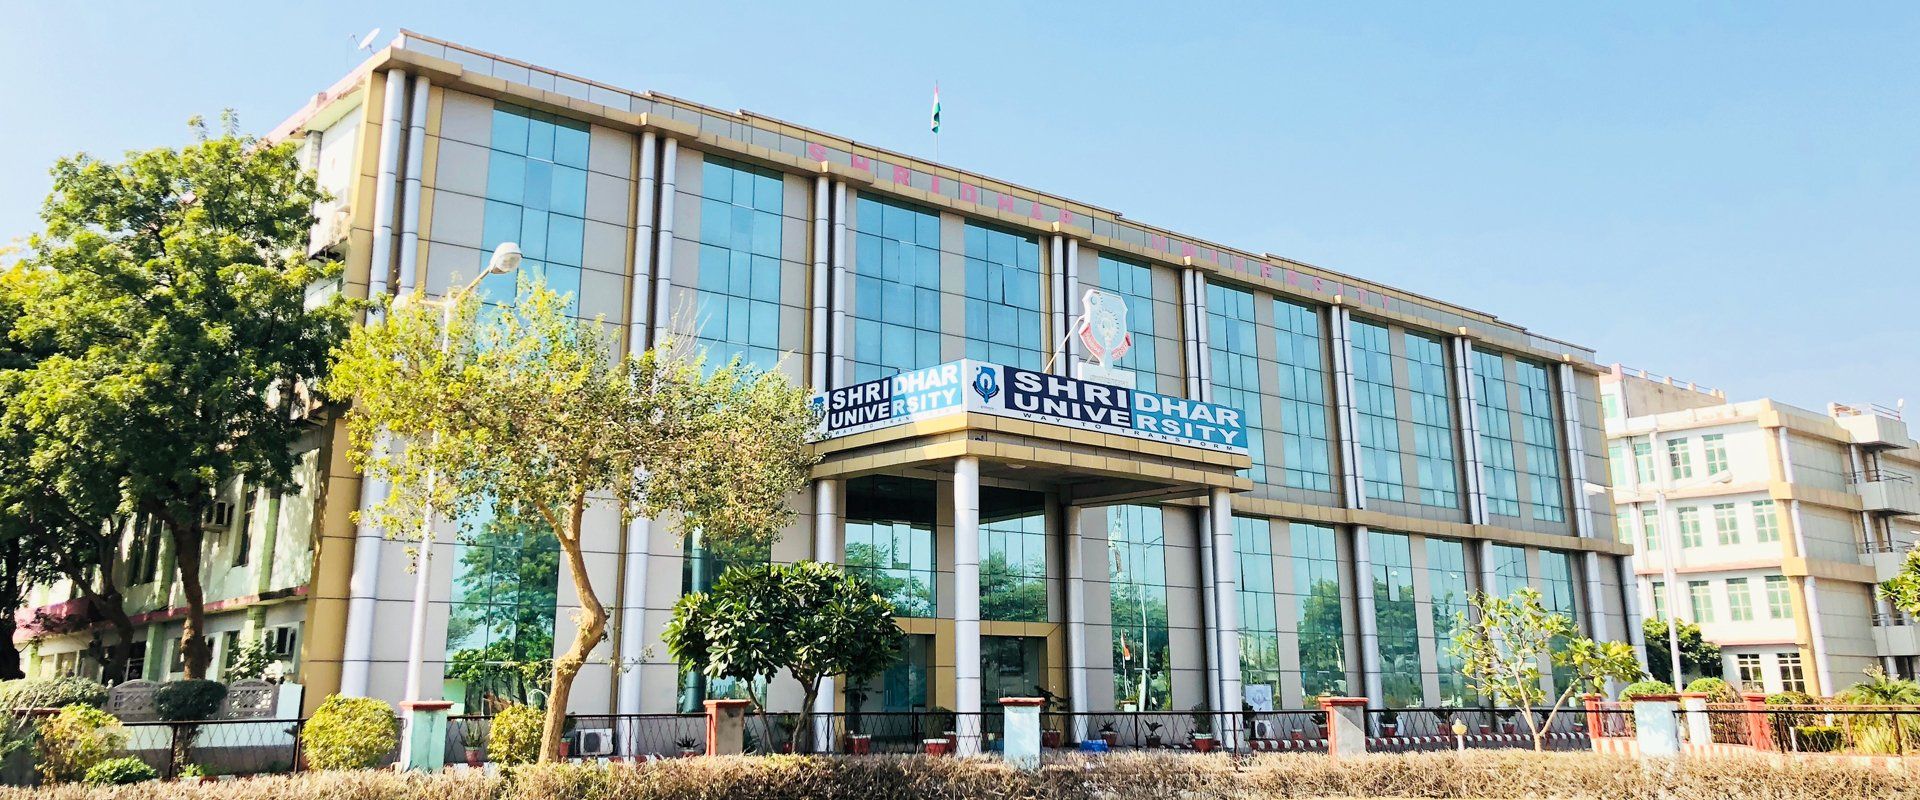 Shridhar University (SU) Campus Building(3)